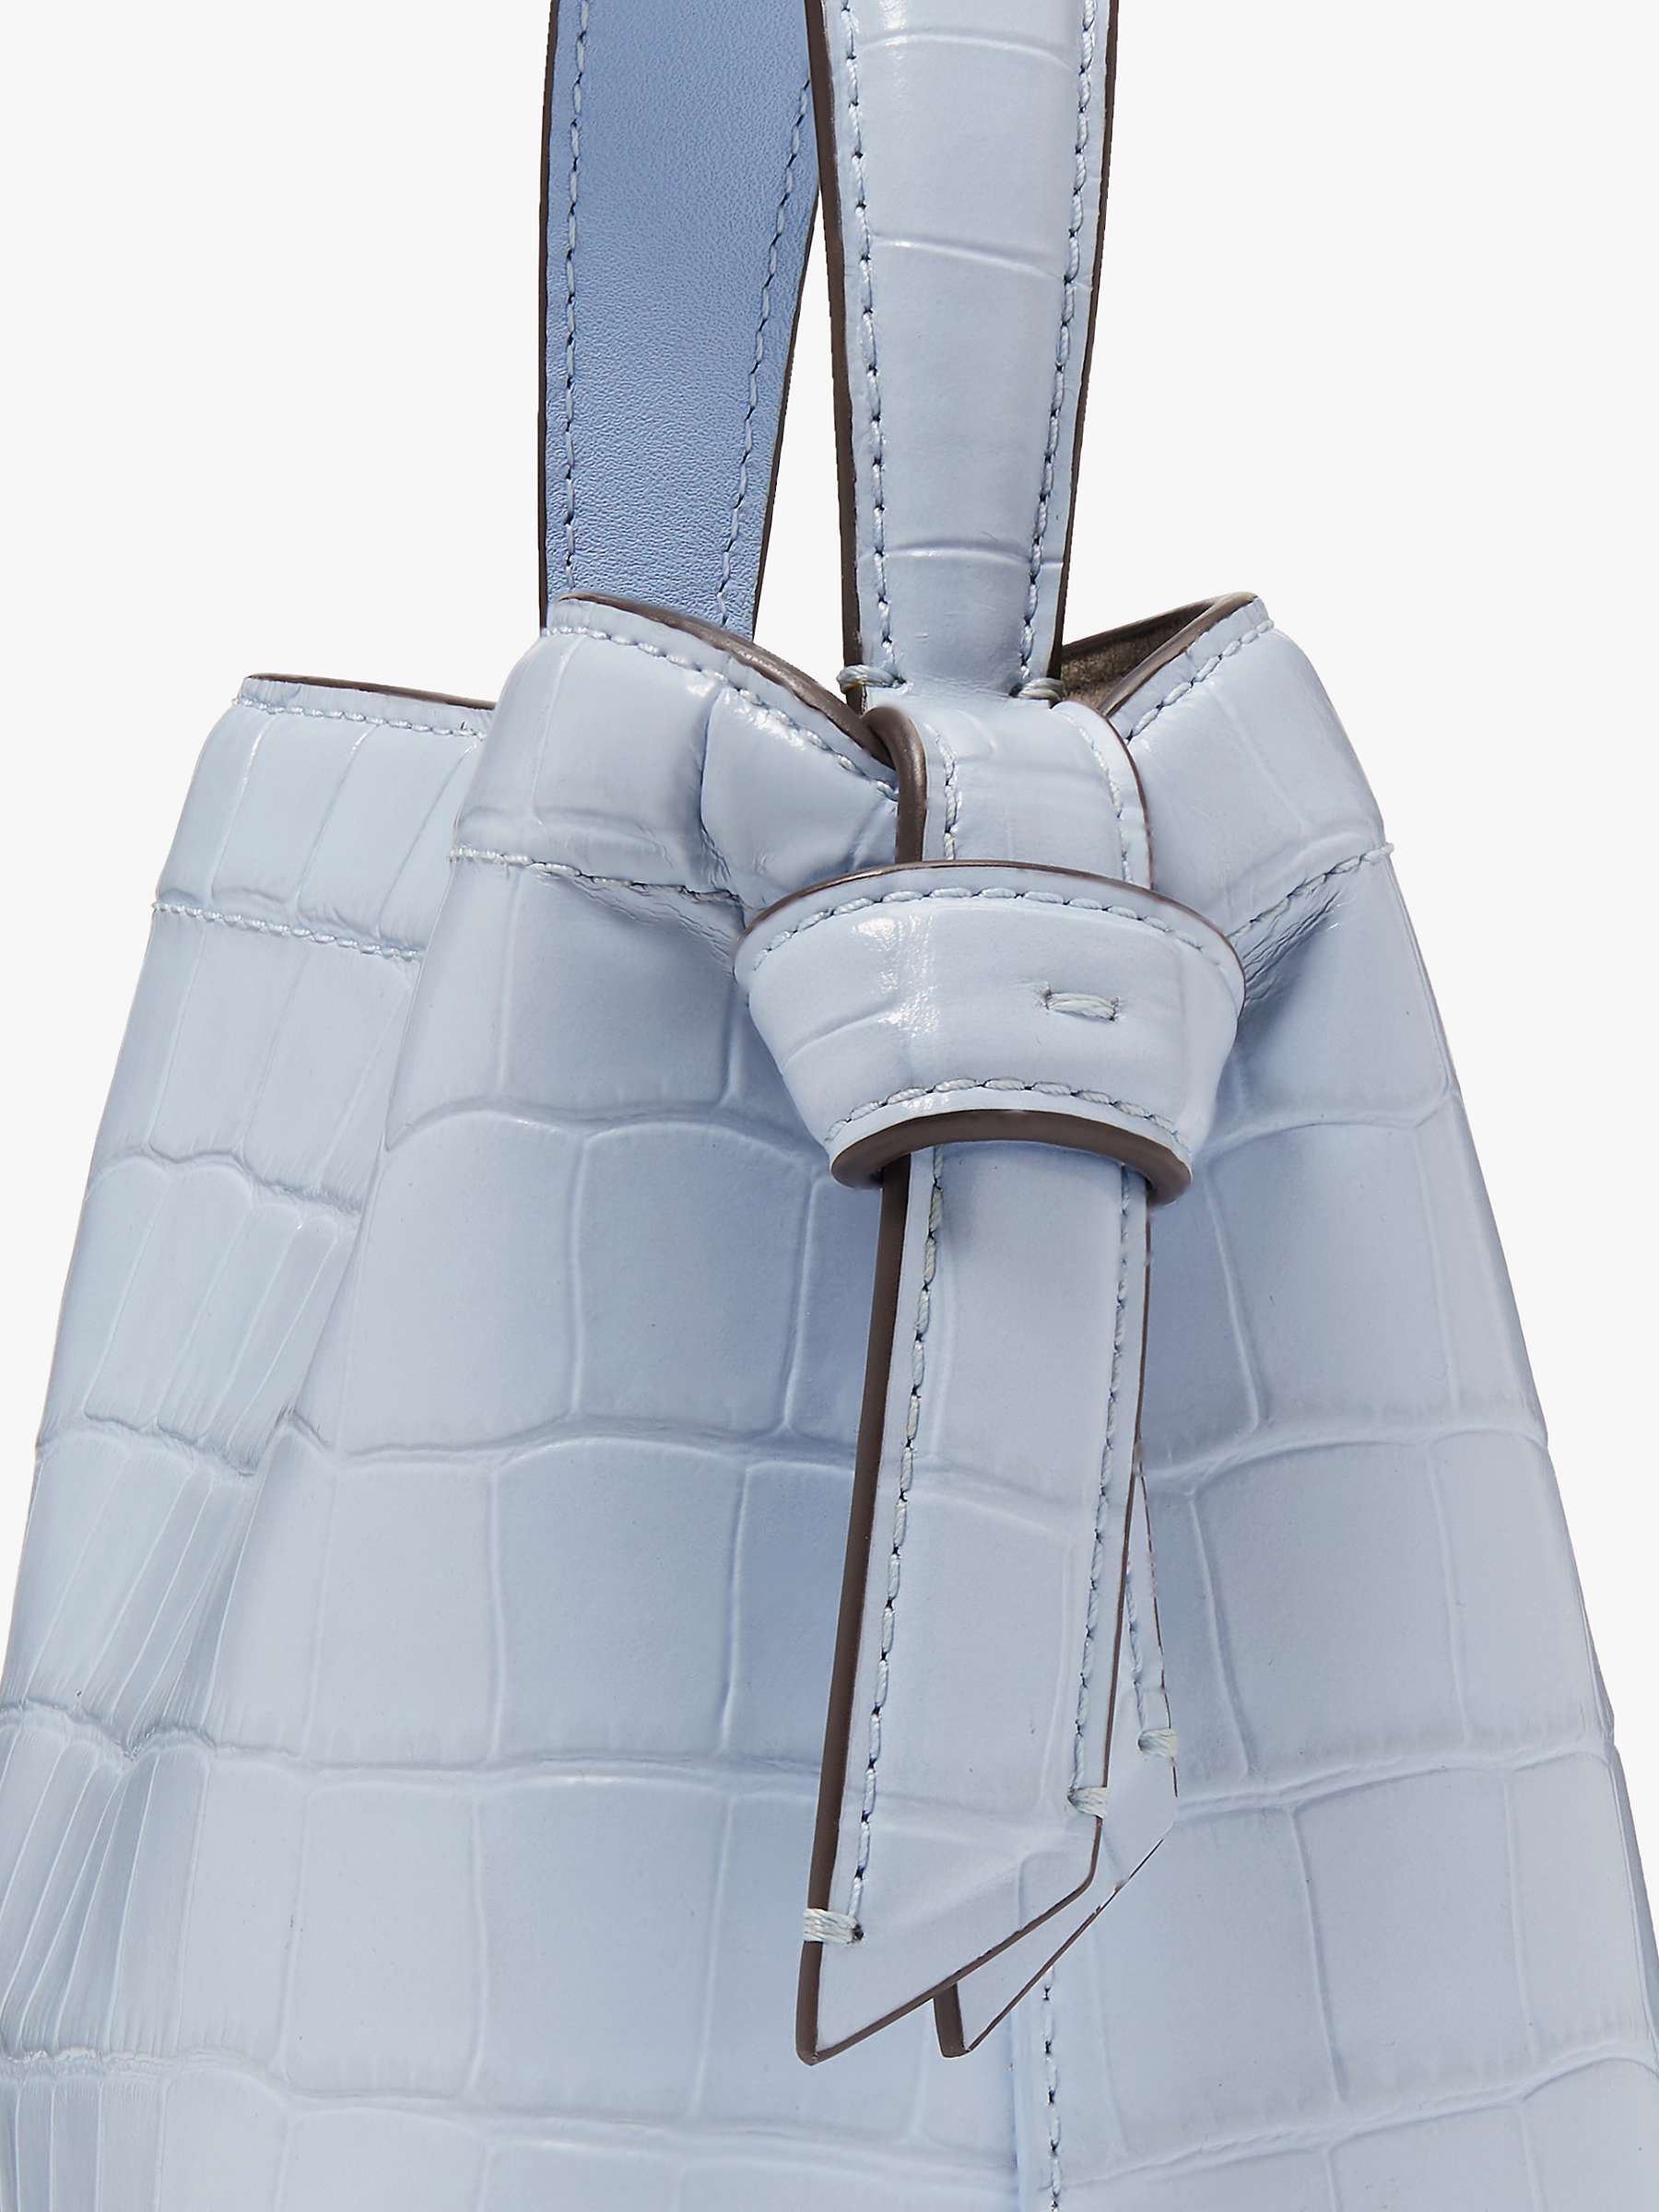 Buy kate spade new york Knott Croc Leather Mini Tote Bag, North Star Online at johnlewis.com